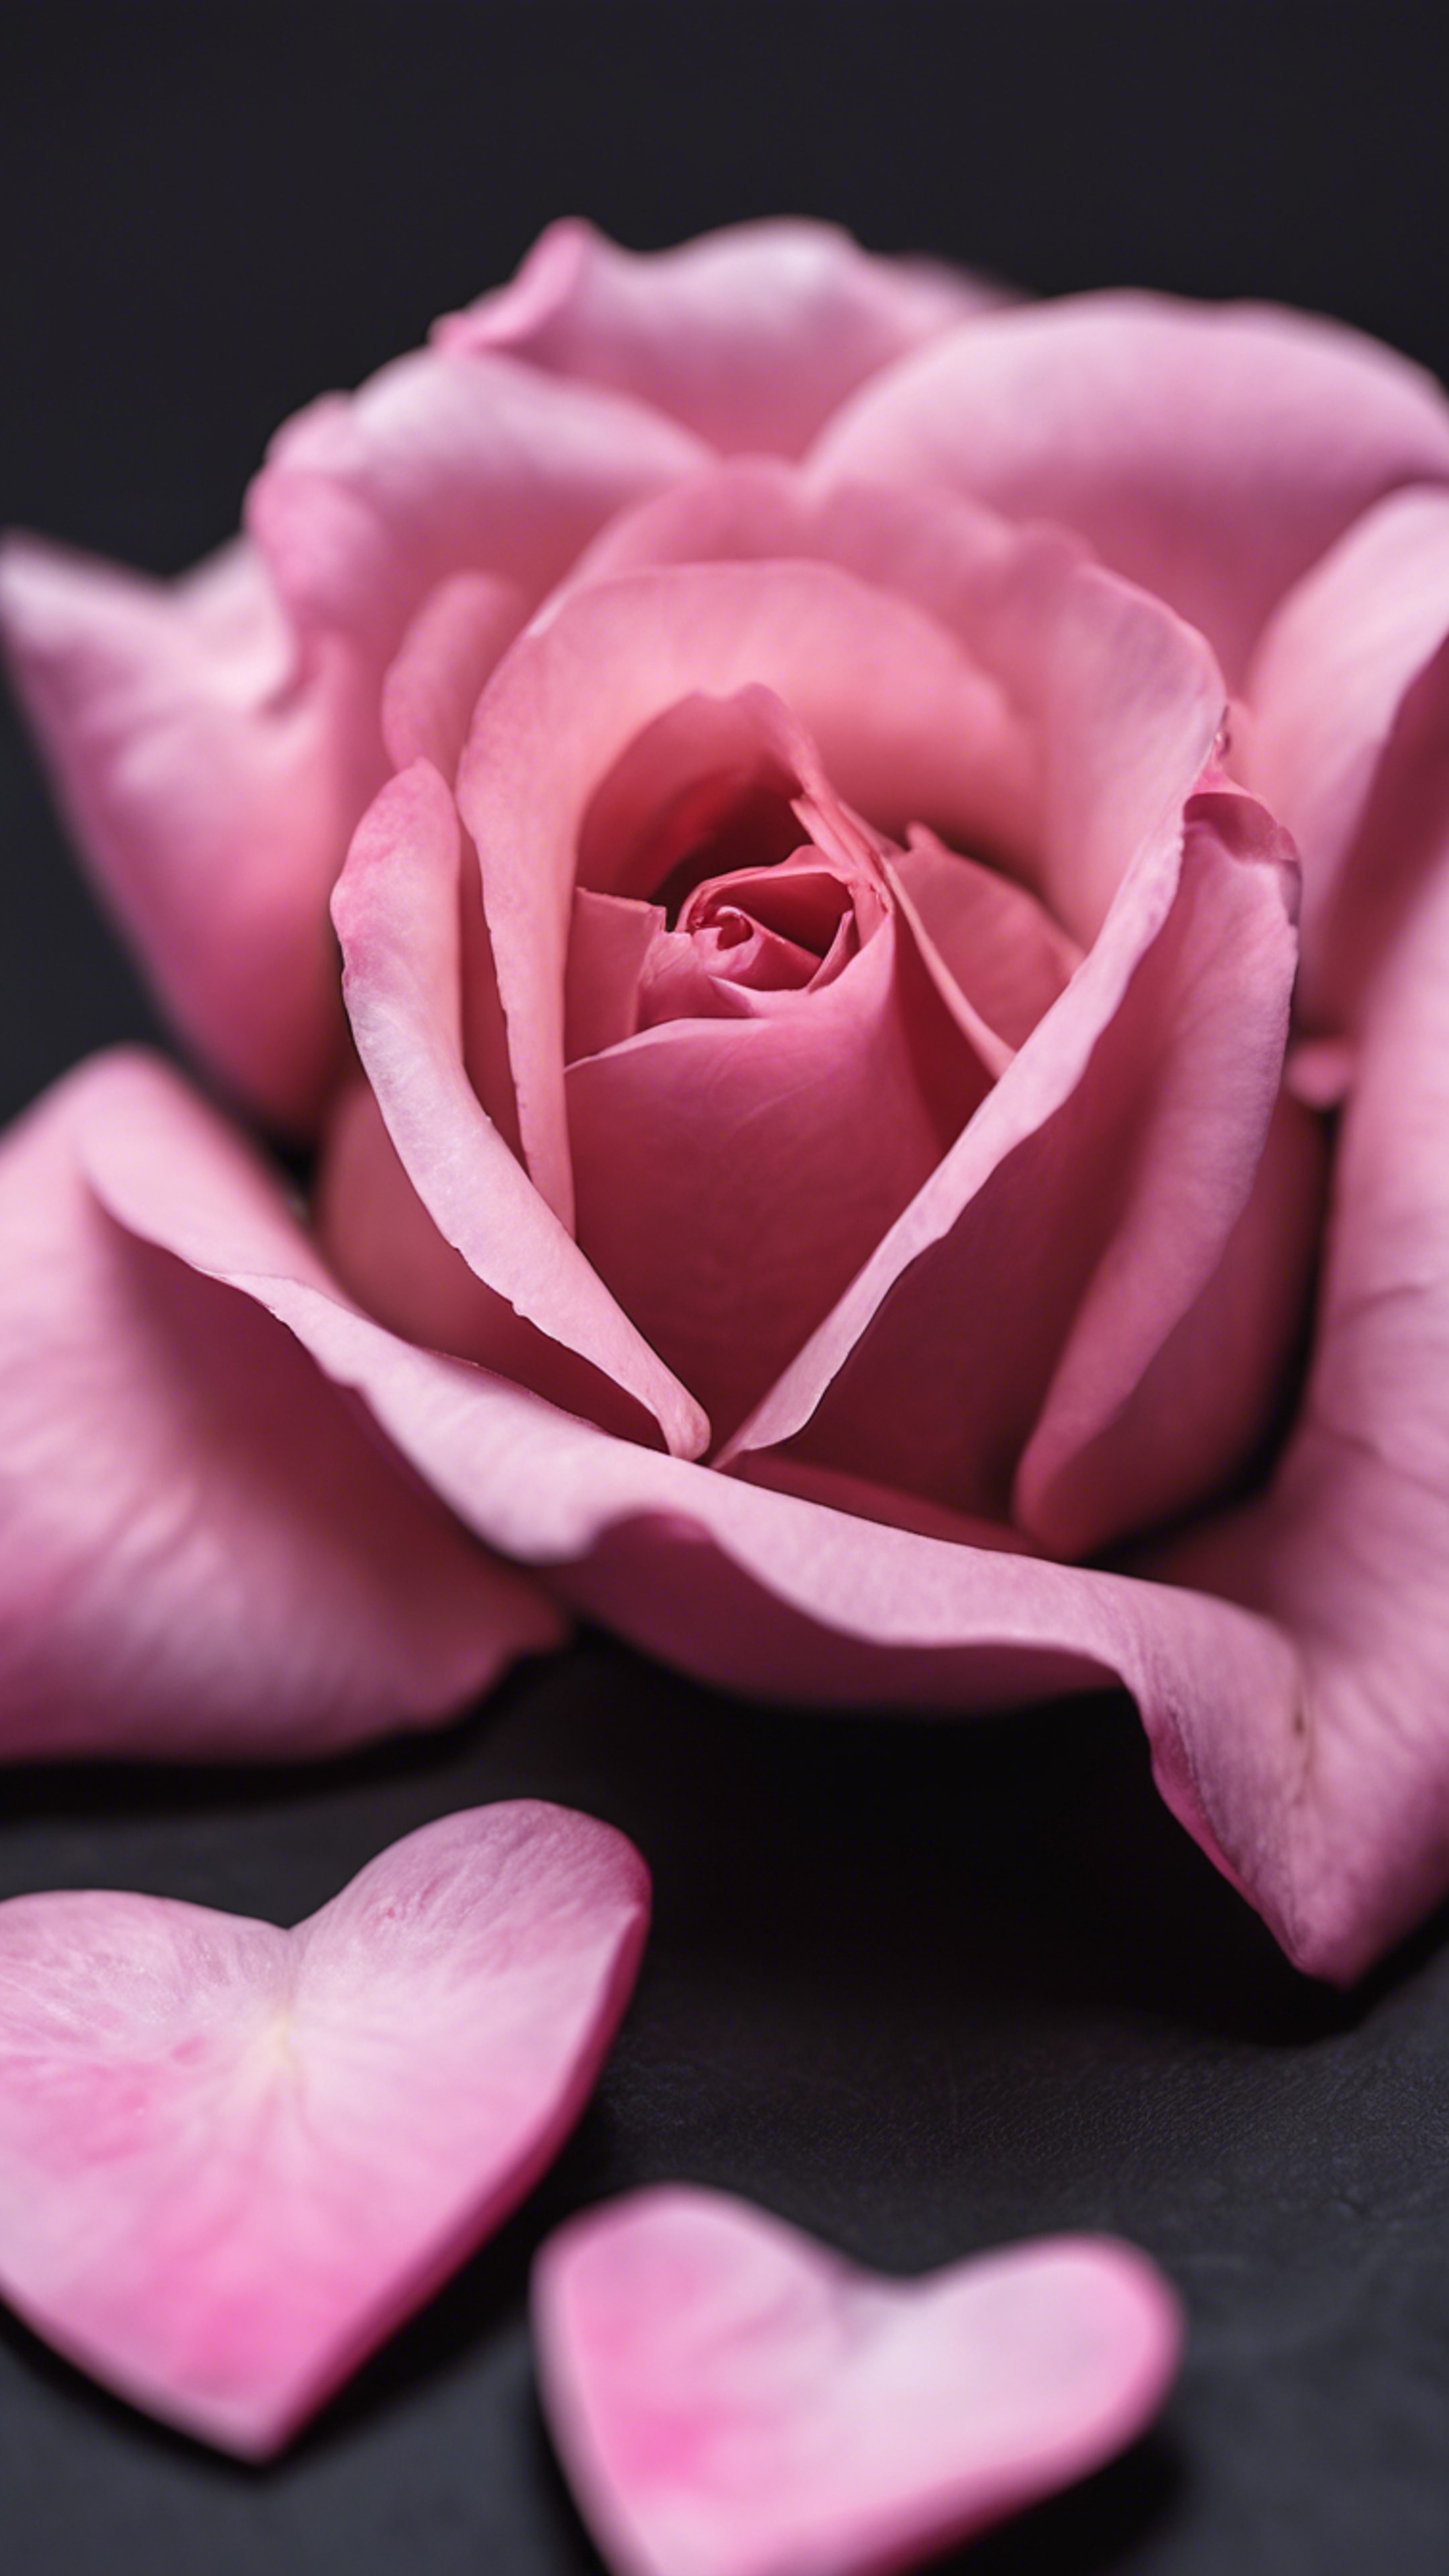 A single, perfect pink heart-shaped rose petal on a black table. ផ្ទាំង​រូបភាព[a14a0e64e3fd4358915b]